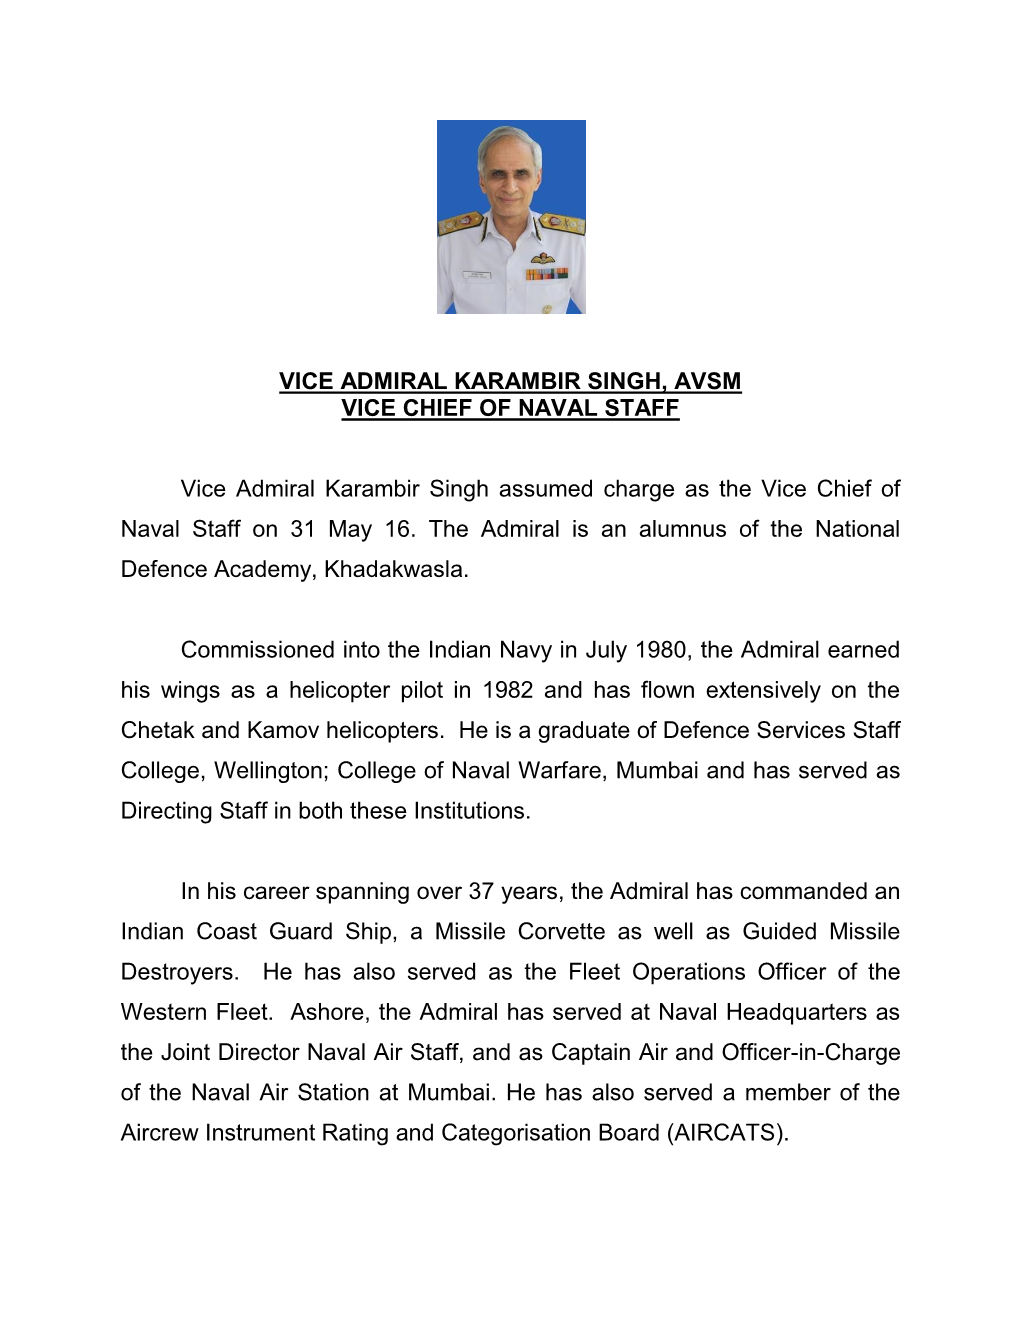 Vice Admiral Karambir Singh, Avsm Vice Chief of Naval Staff